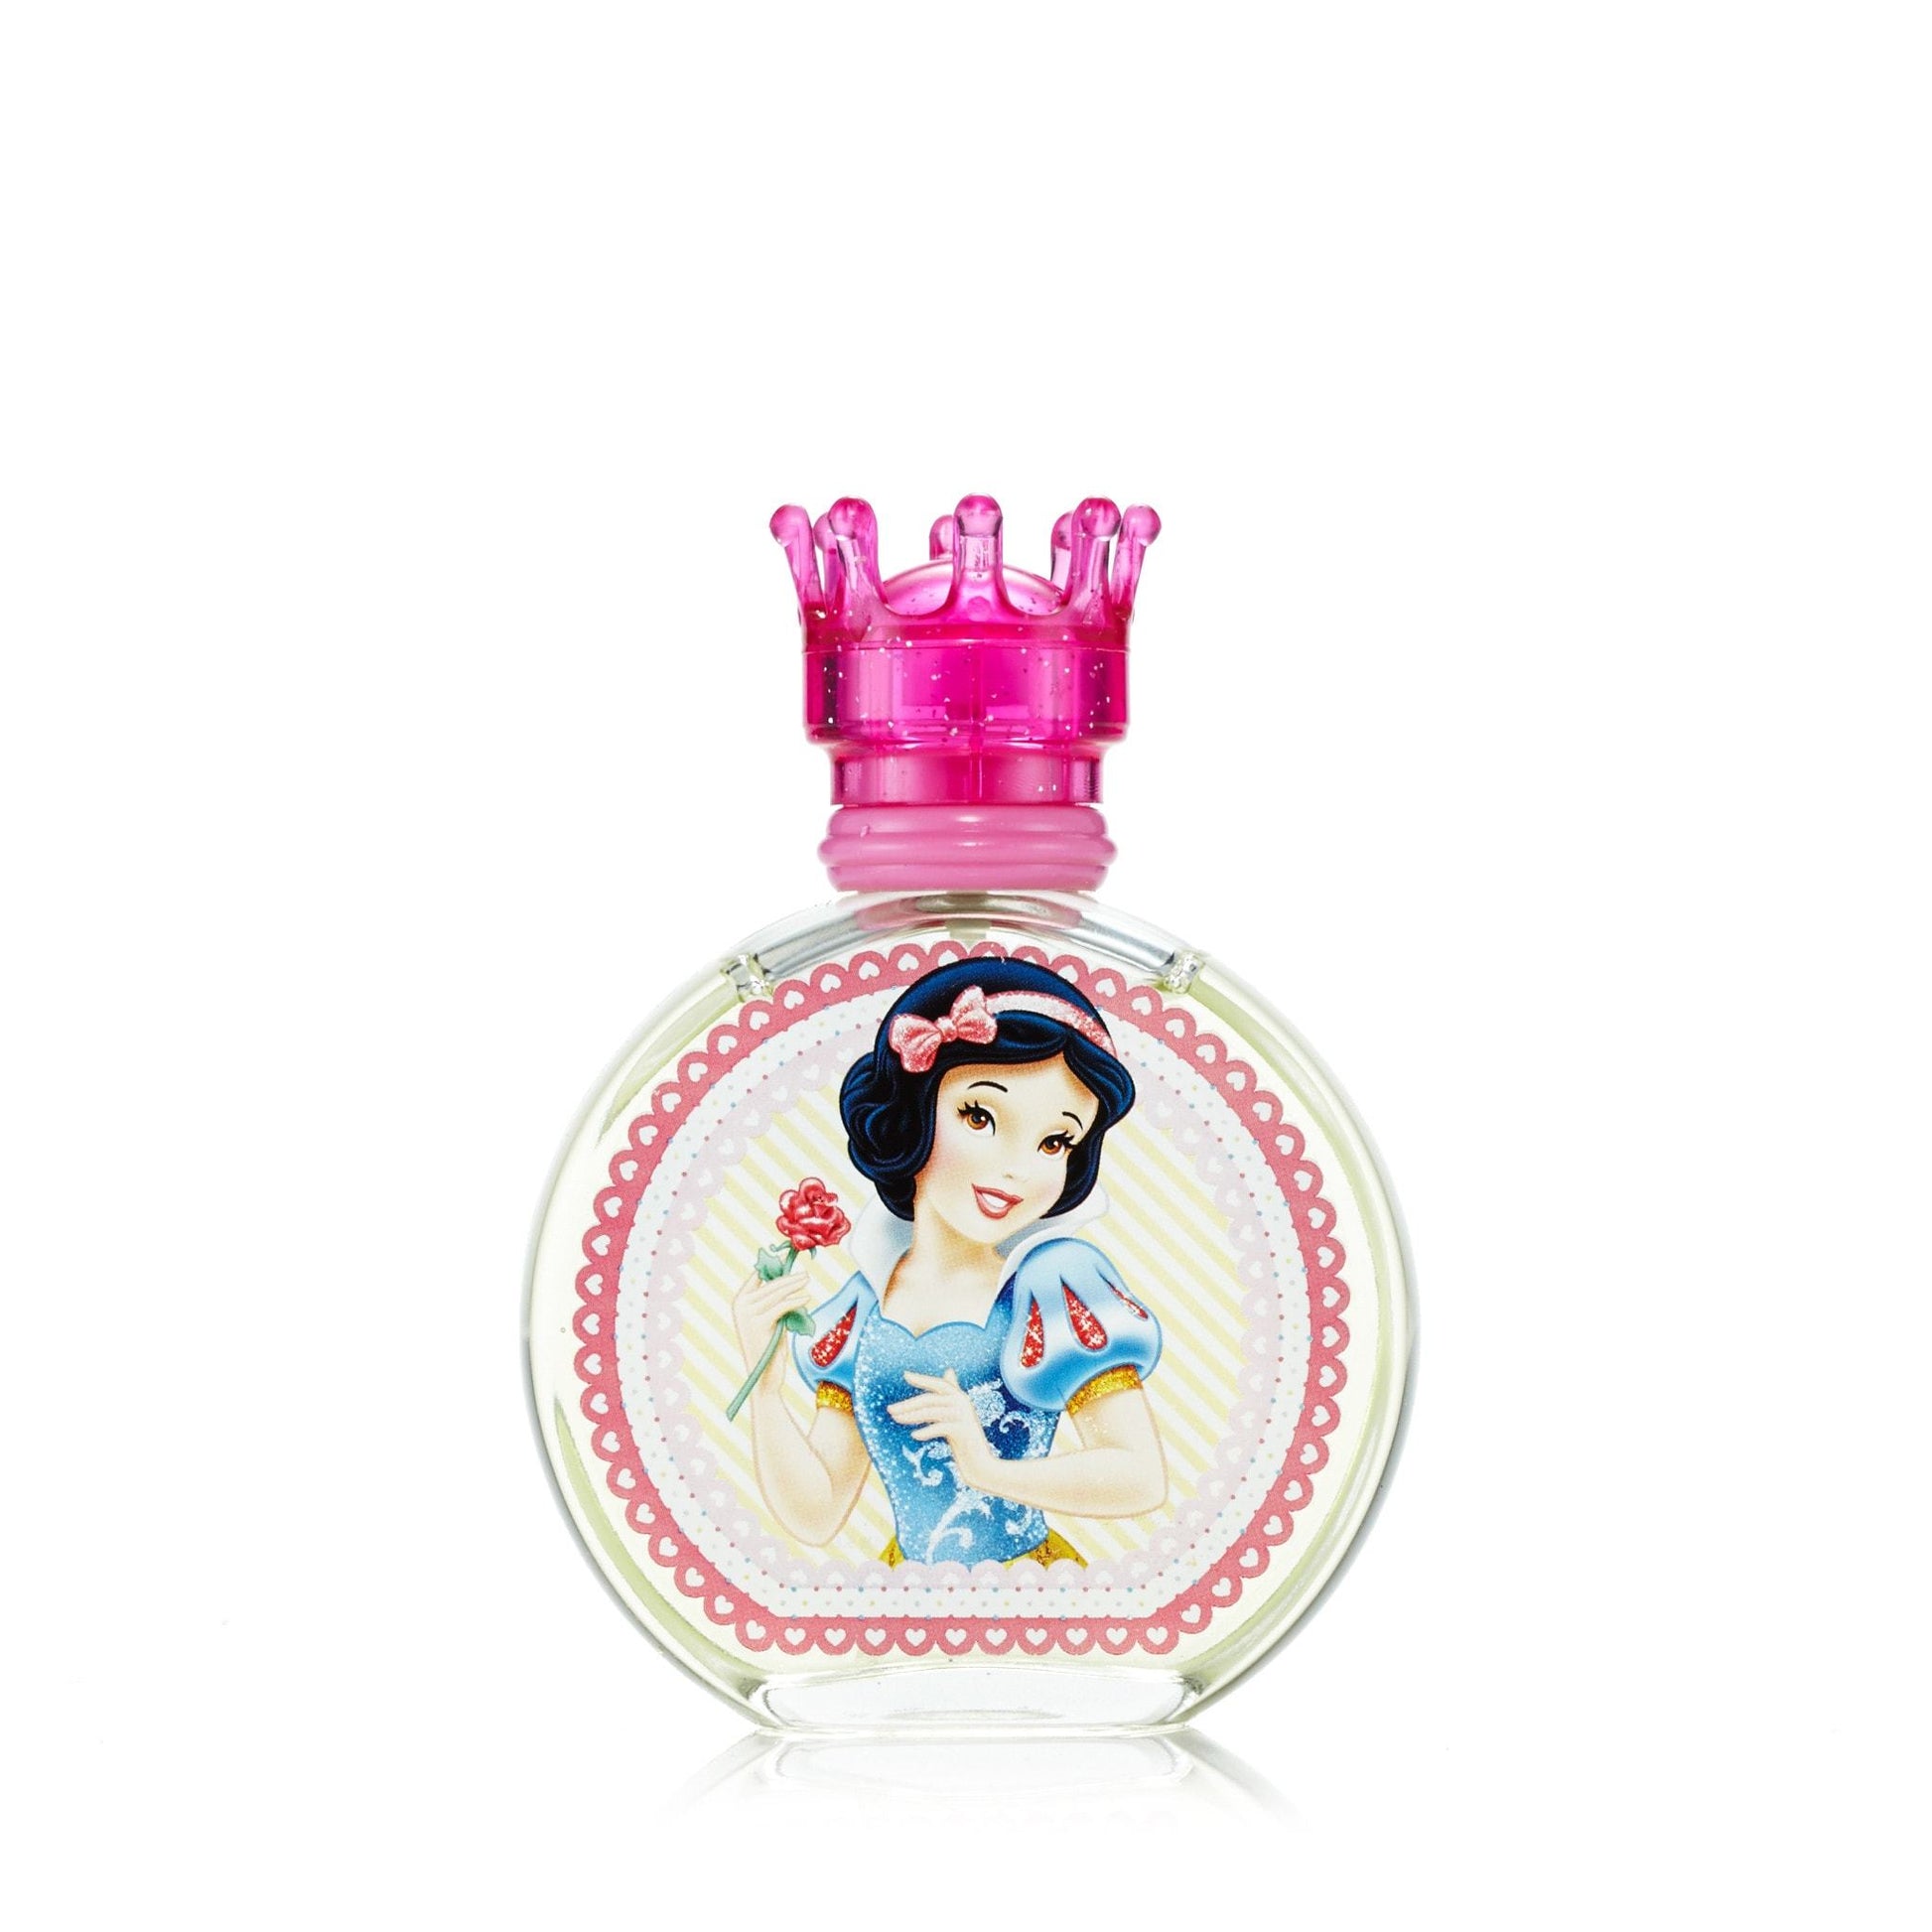 Snow White Eau de Toilette Spray for Girls by Disney, Product image 2